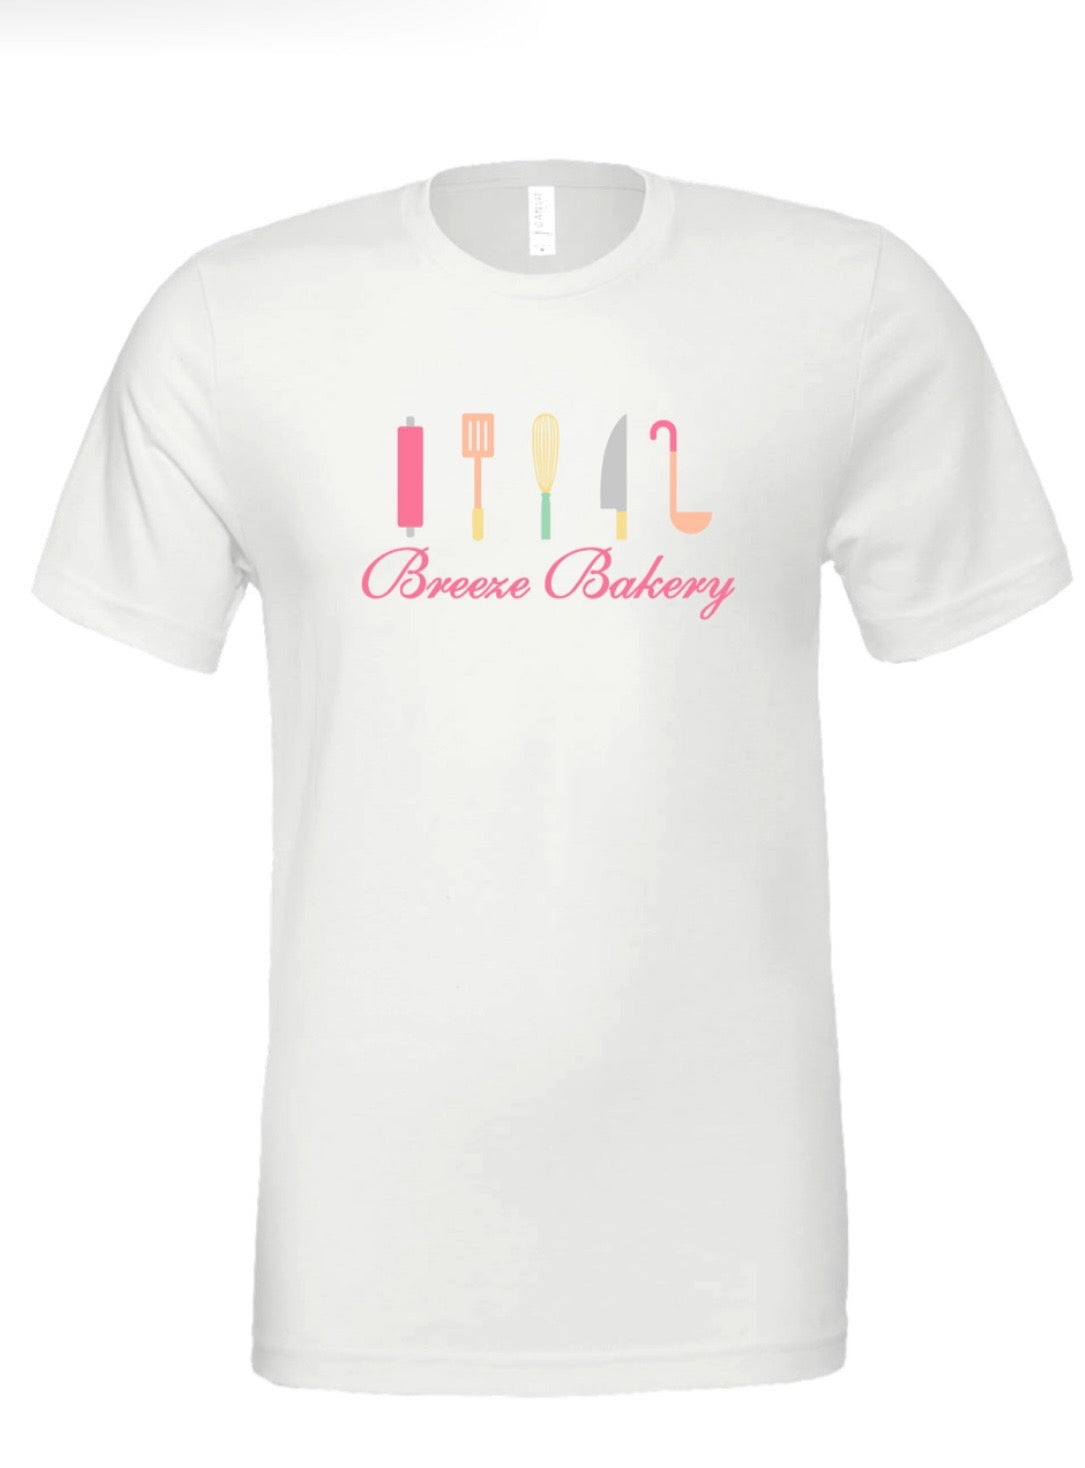 Breeze Bakery T-Shirt